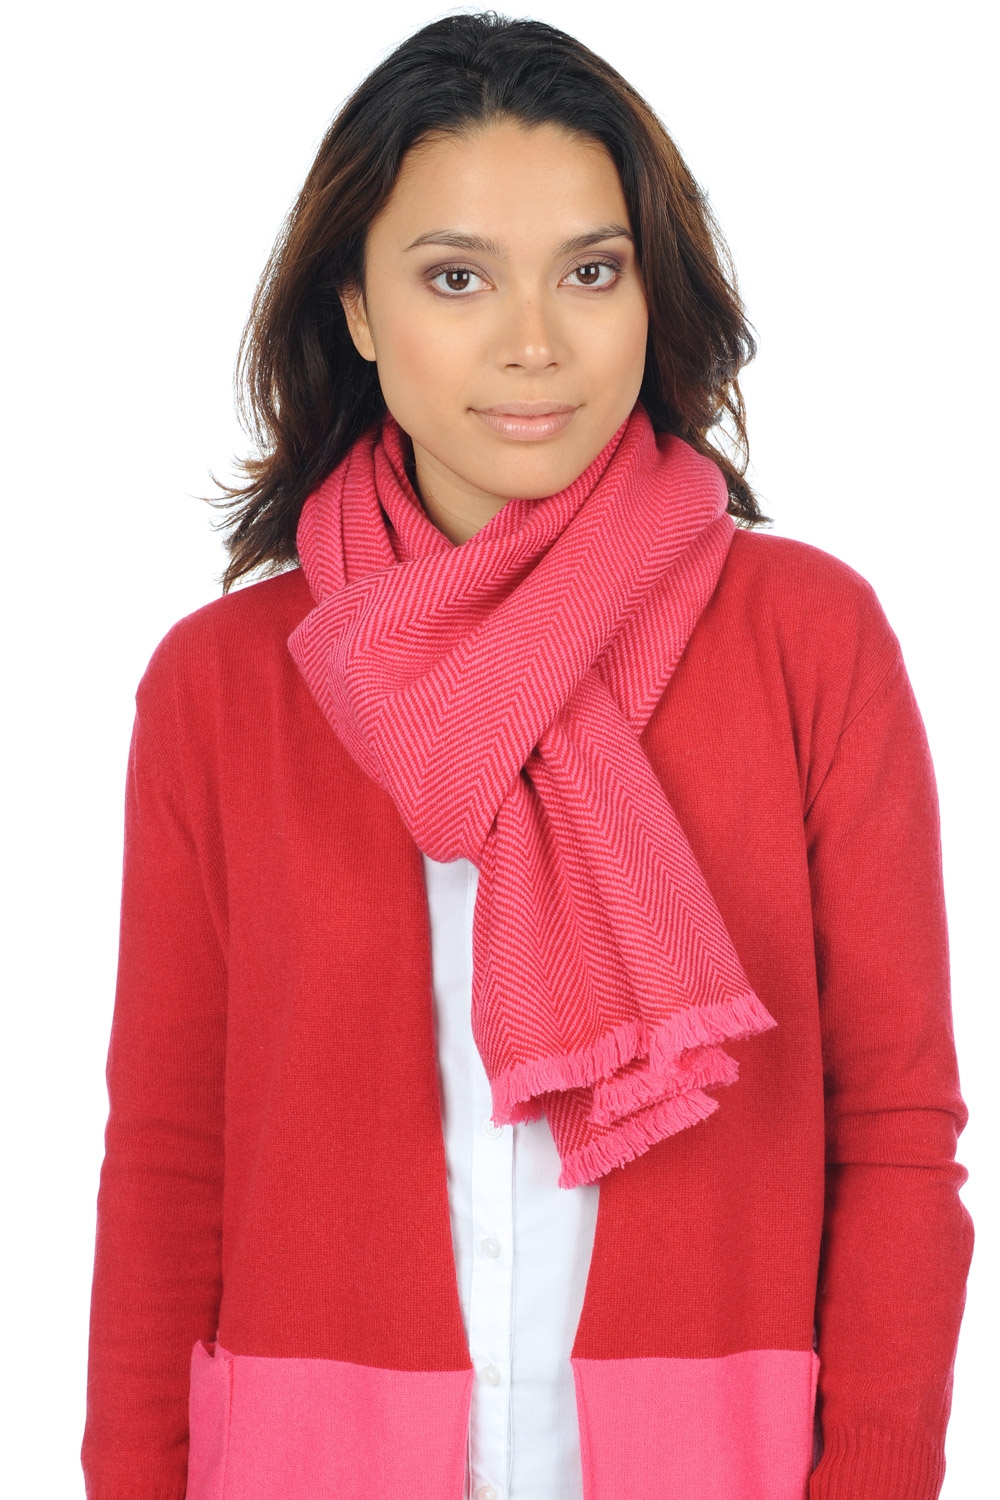 Cashmere accessories scarves mufflers orage shocking pink blood red 200 x 35 cm